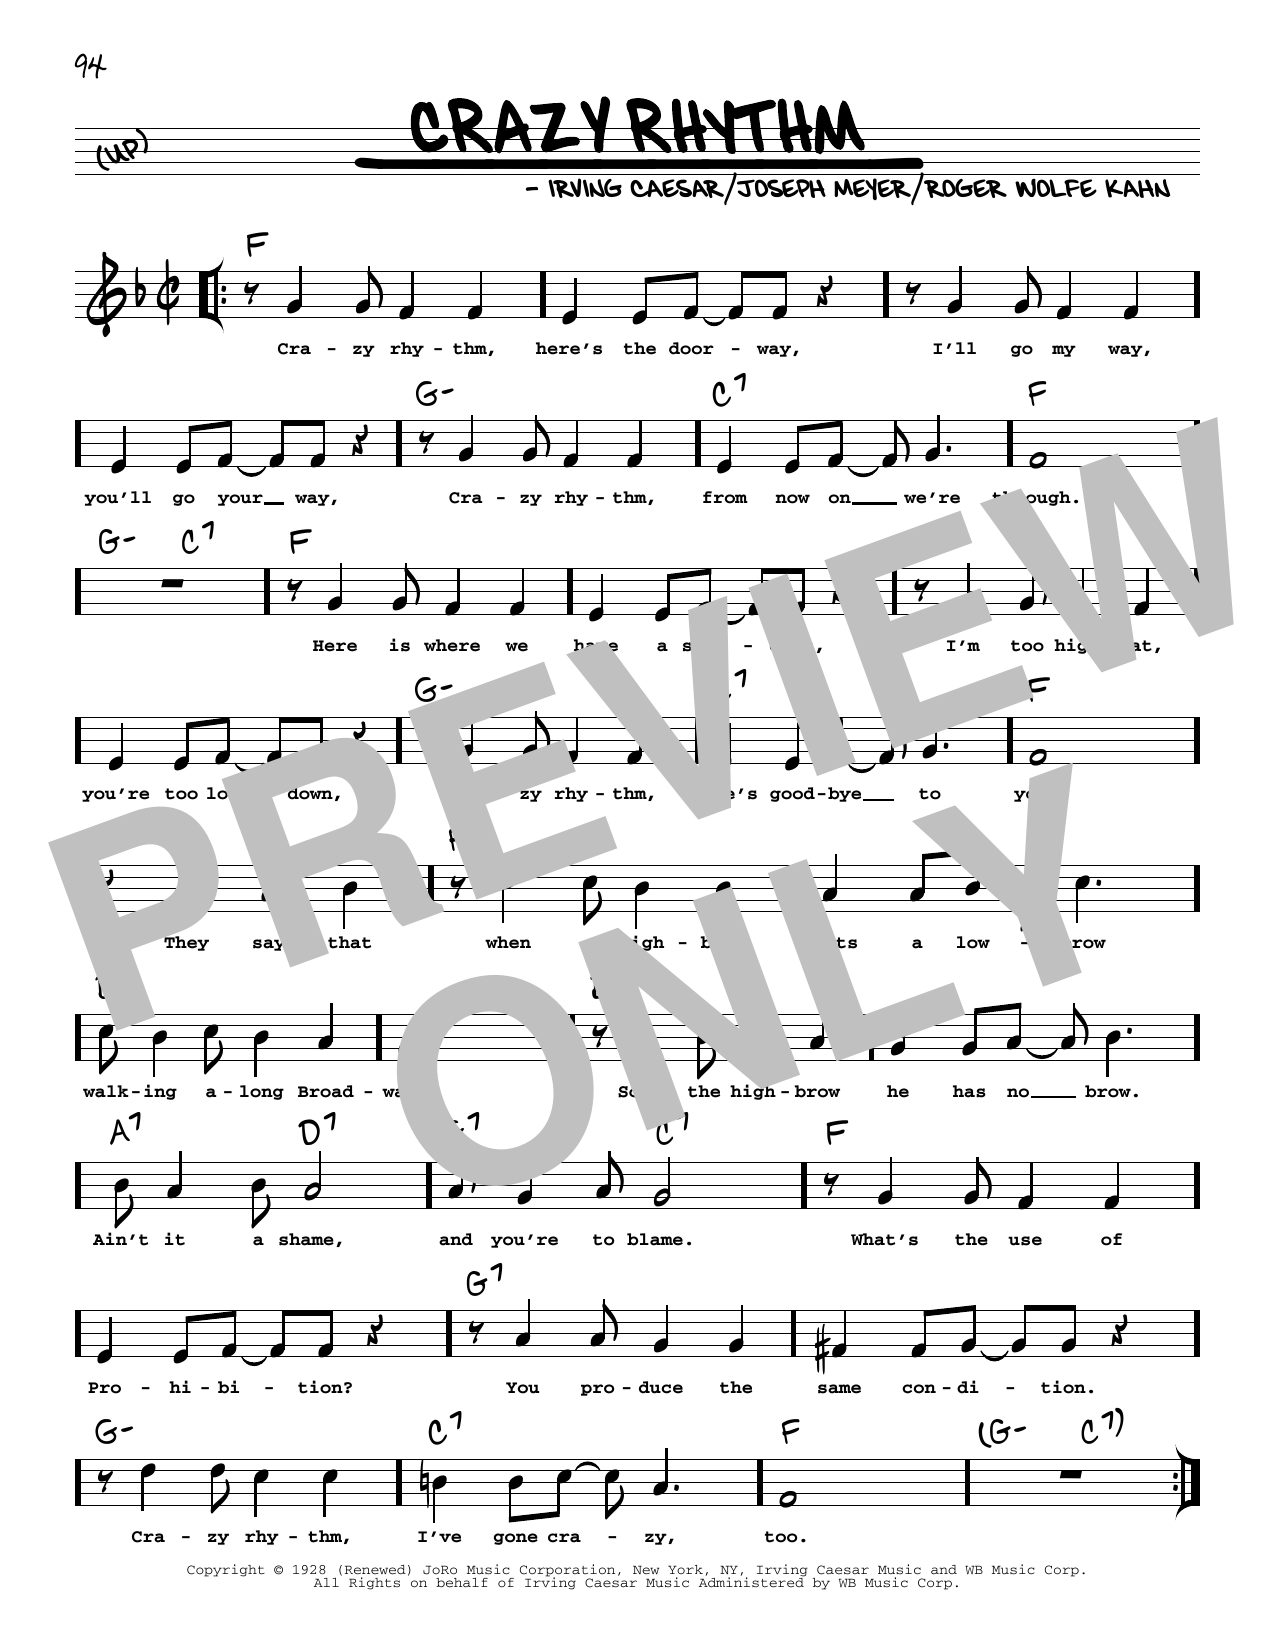 Ben Bernie Crazy Rhythm (arr. Robert Rawlins) Sheet Music Notes & Chords for Real Book – Melody, Lyrics & Chords - Download or Print PDF